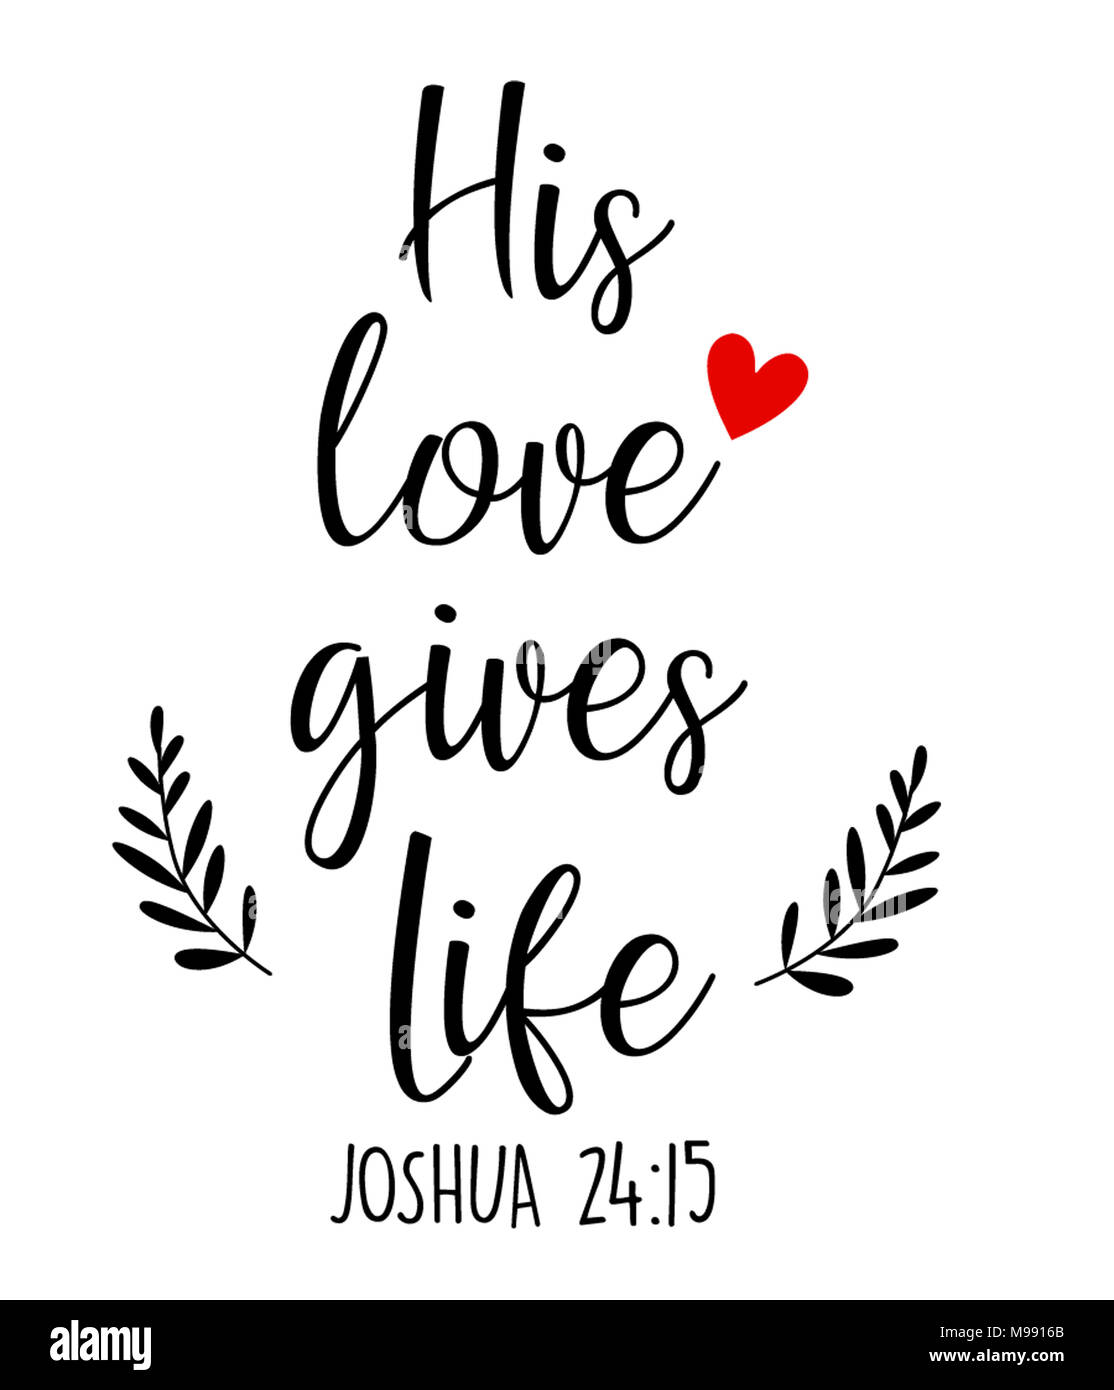 Image result for scripture on love